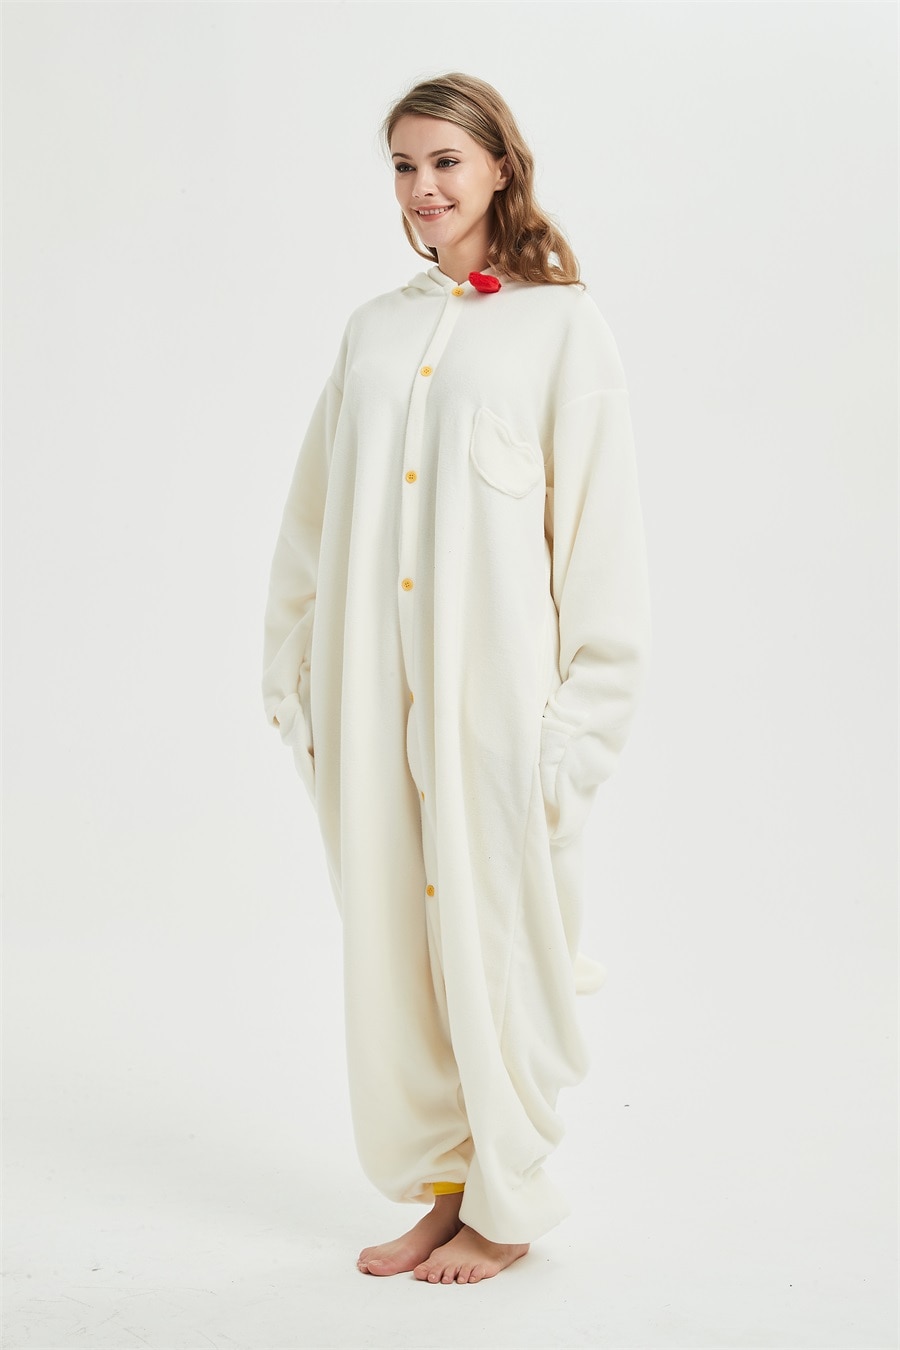 Unisex Cock Onesies Women Animal Kigurumis White Cute Funny Overalls Adult Festival GIft Halloween Suit Winter Pajama Loose